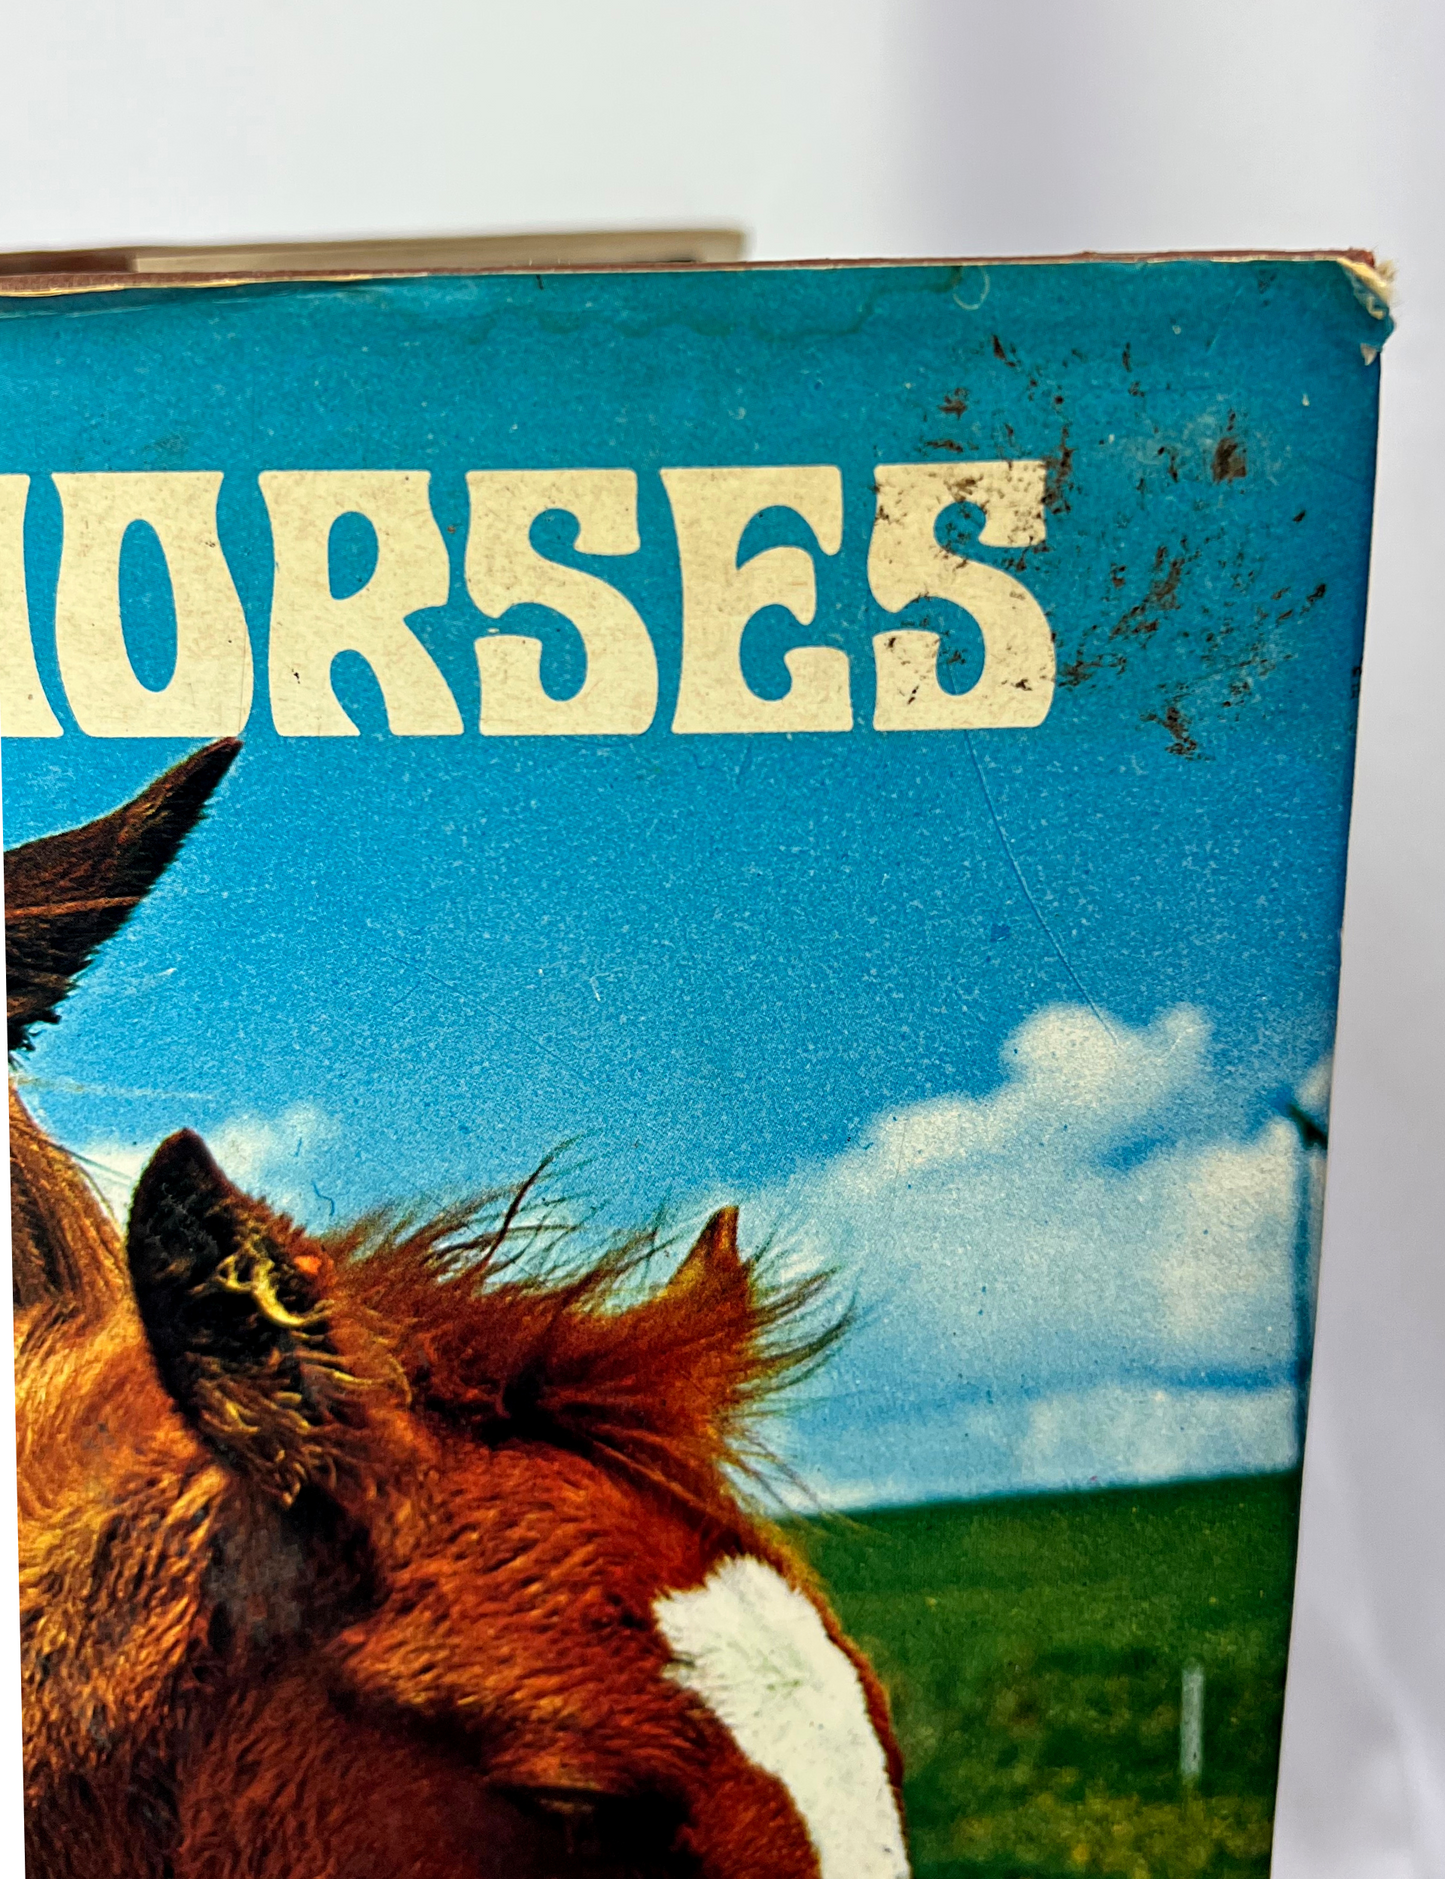 1976 The Wondrous World of Horses Glossy Animal Nature Photo Book